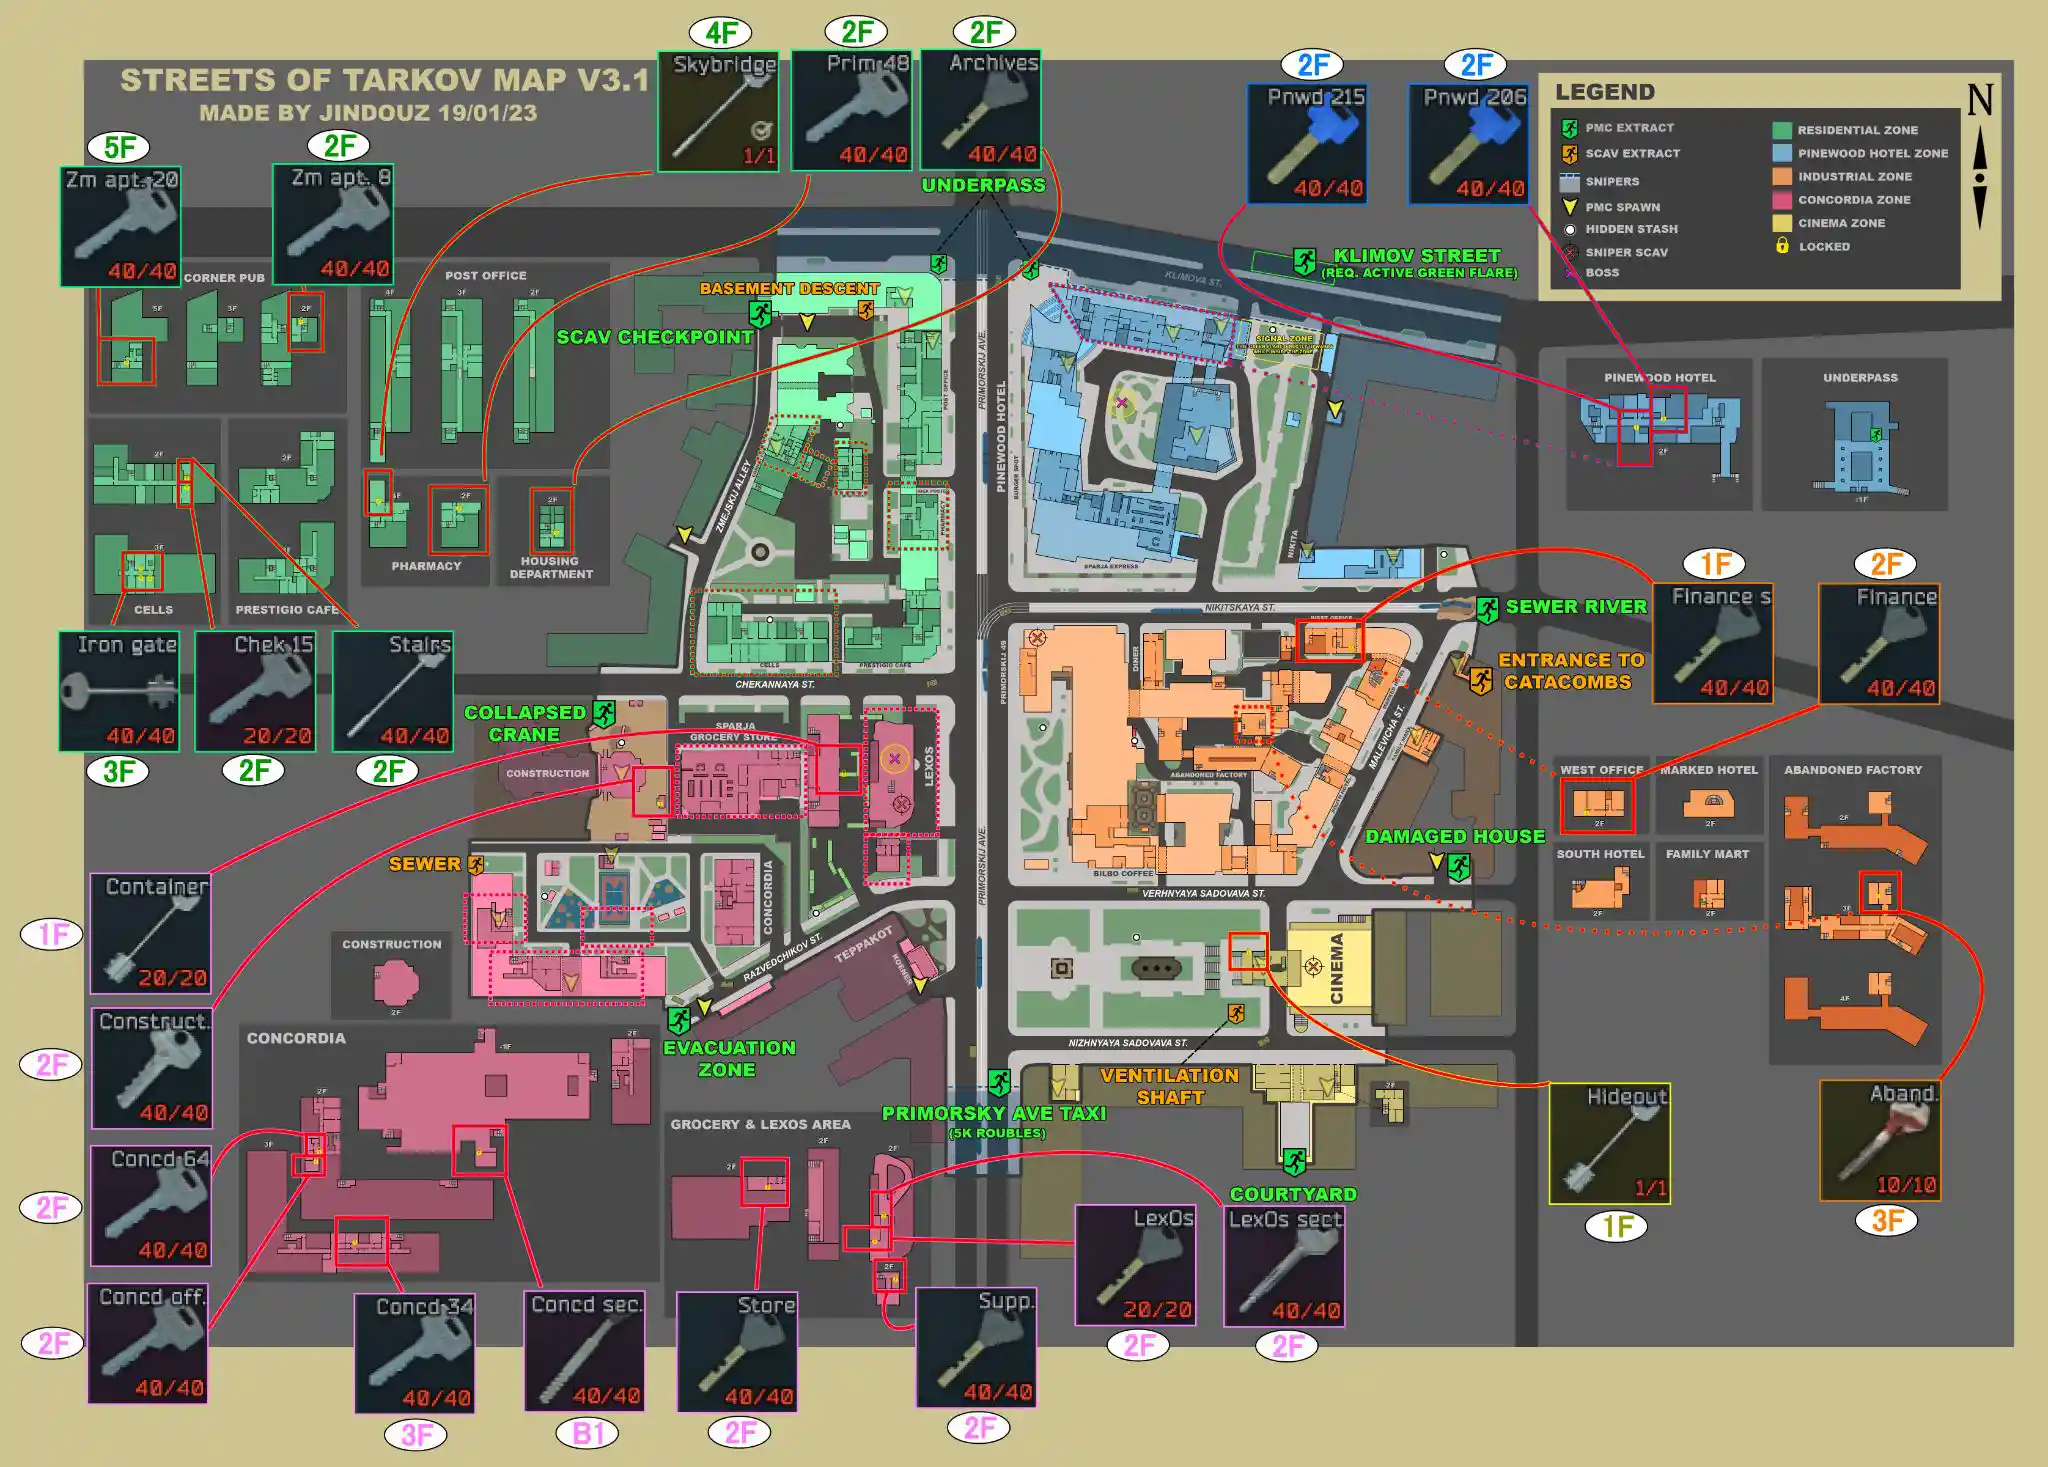 STREETS_OF_TARKOV_All_icon_key_MAP_ver3.jpg